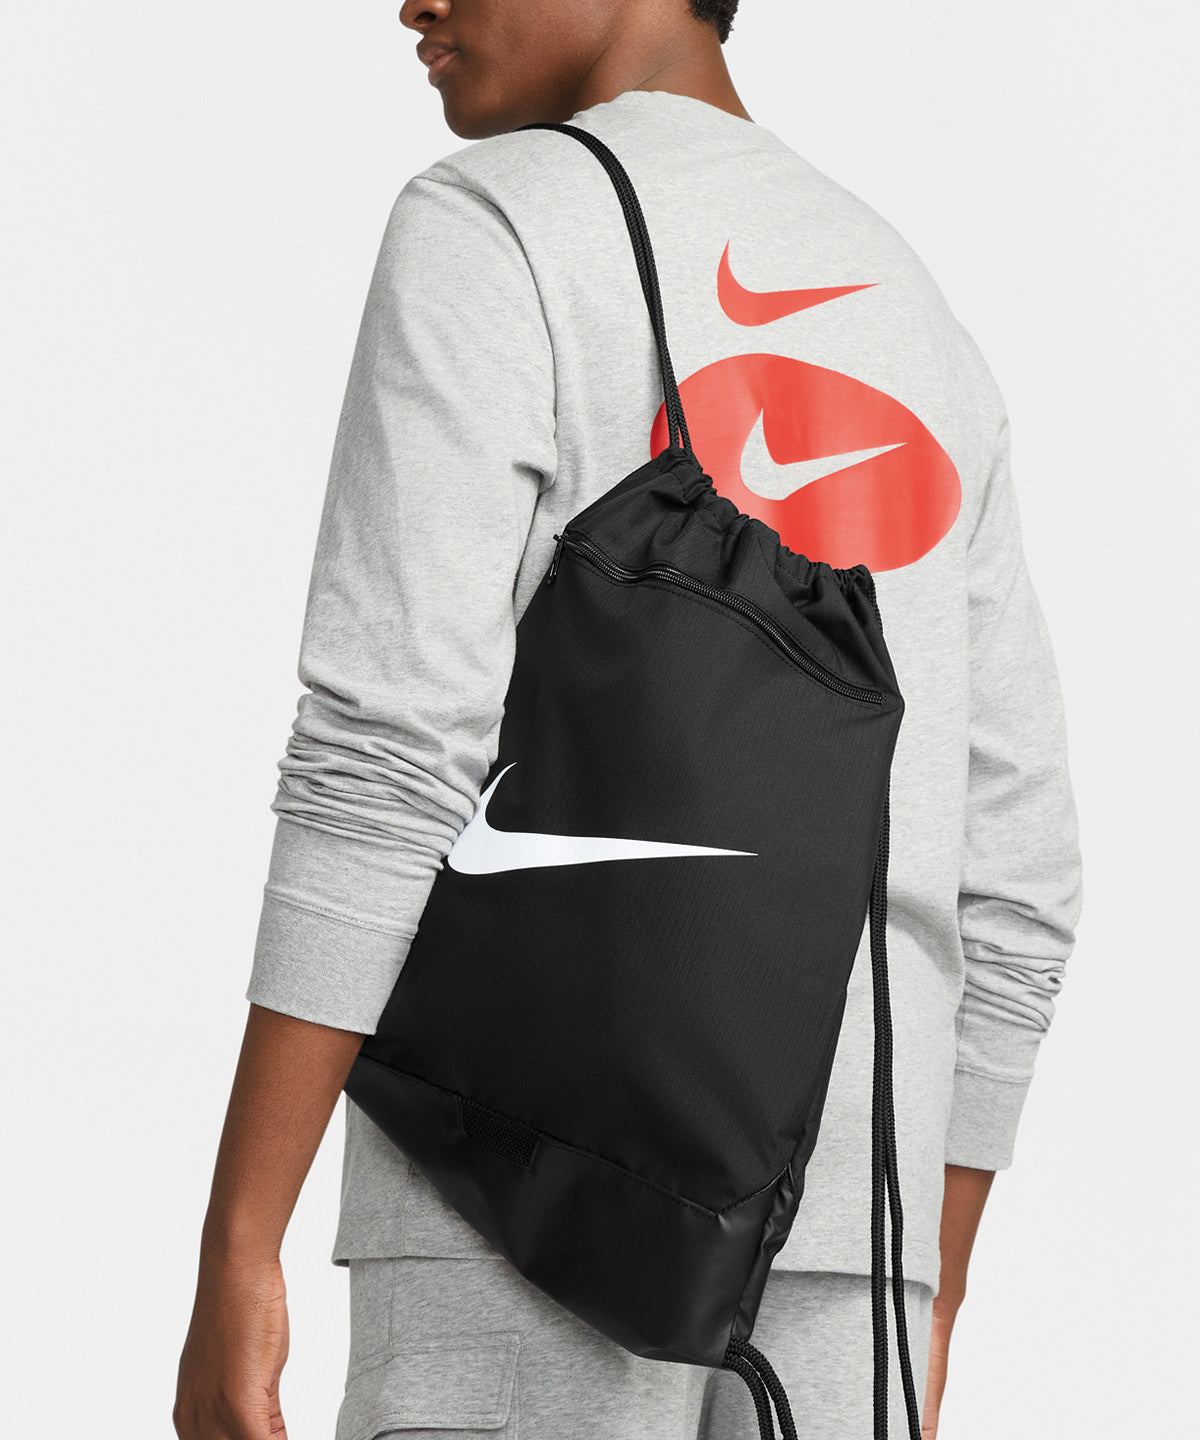 Töskur - Nike Brasilia Drawstring (18 Litre)